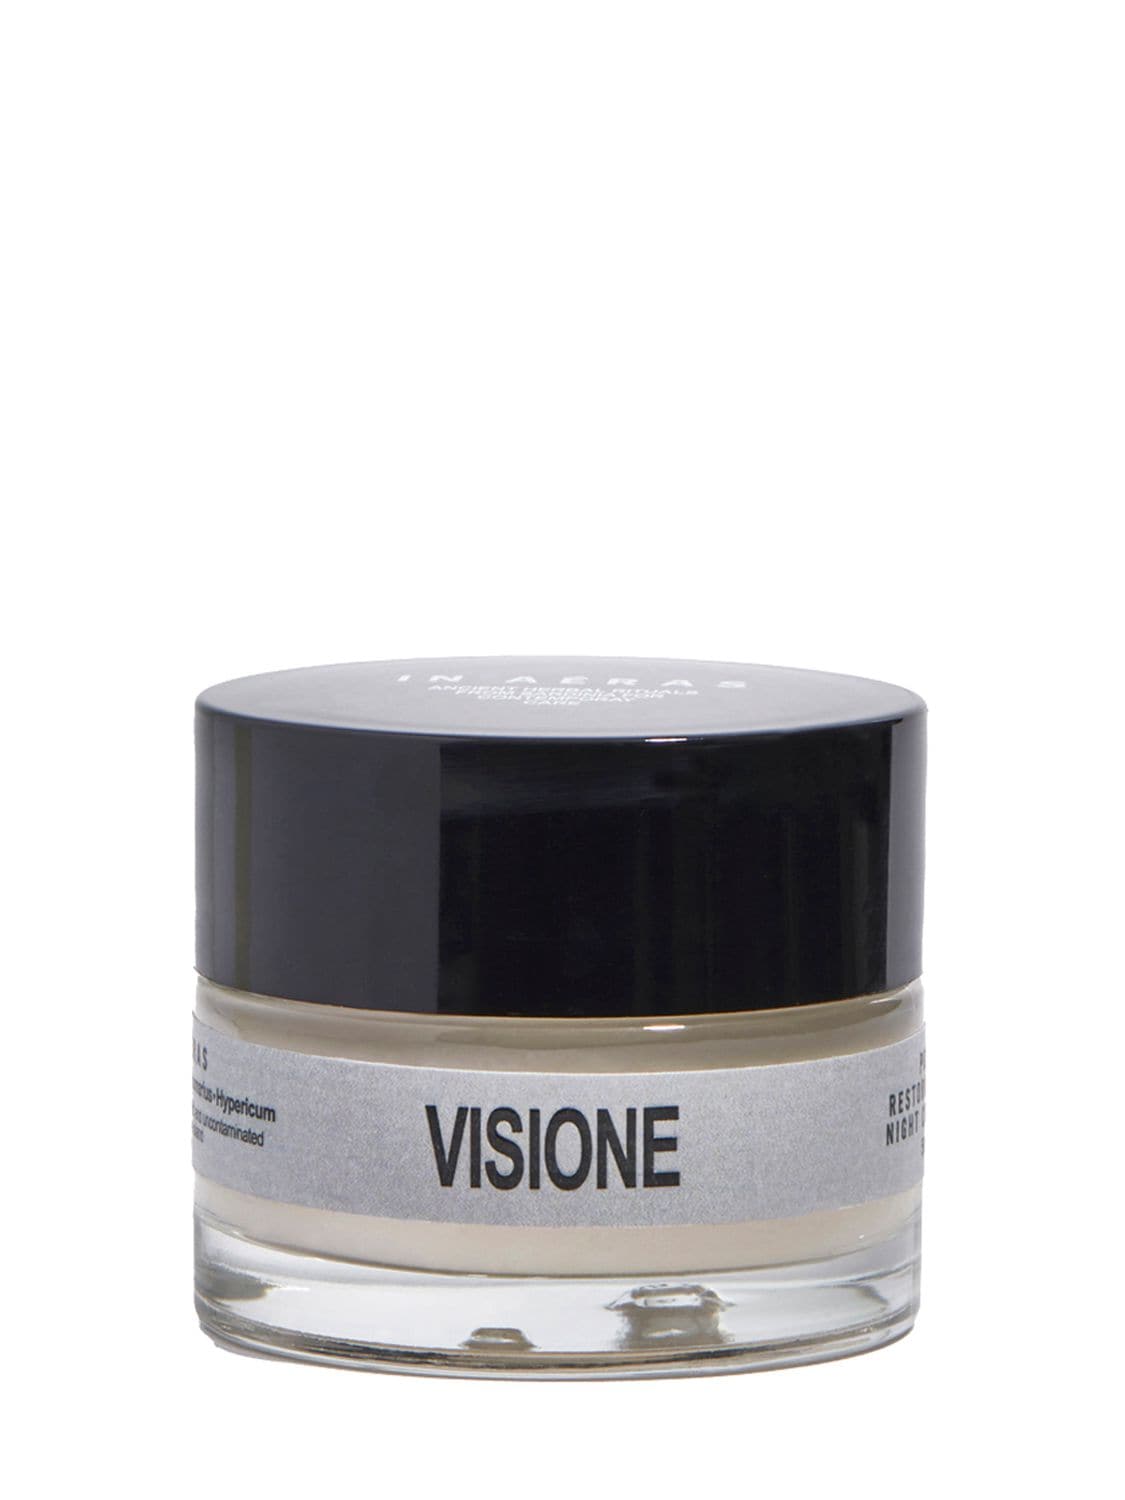 Image of Visione Potent Restorative Night Cream